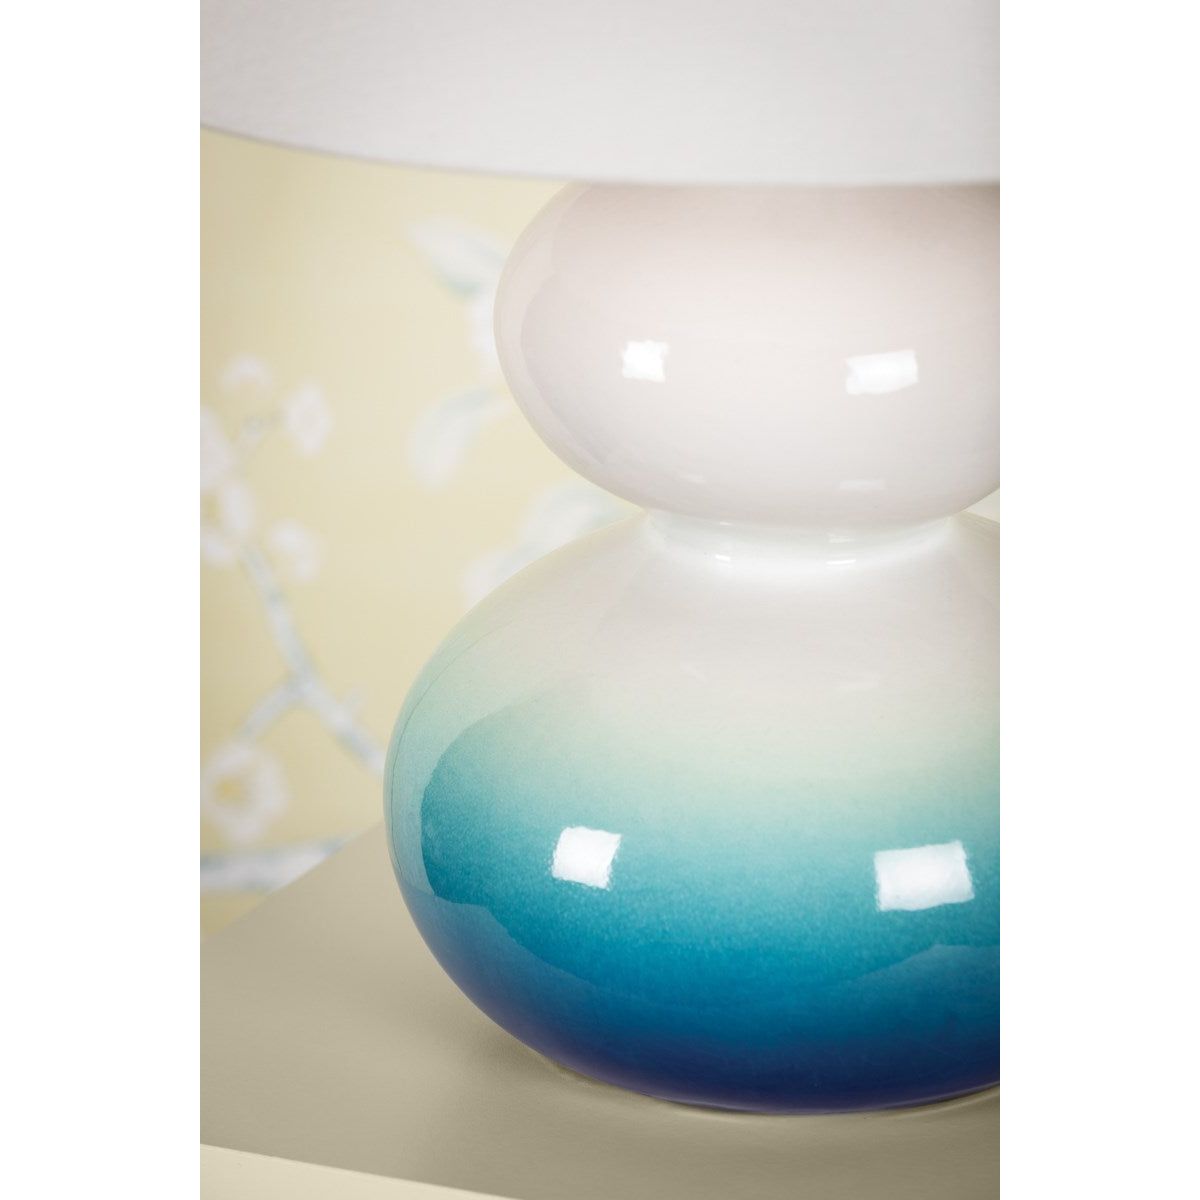 Aimee 1-Light Table Lamp